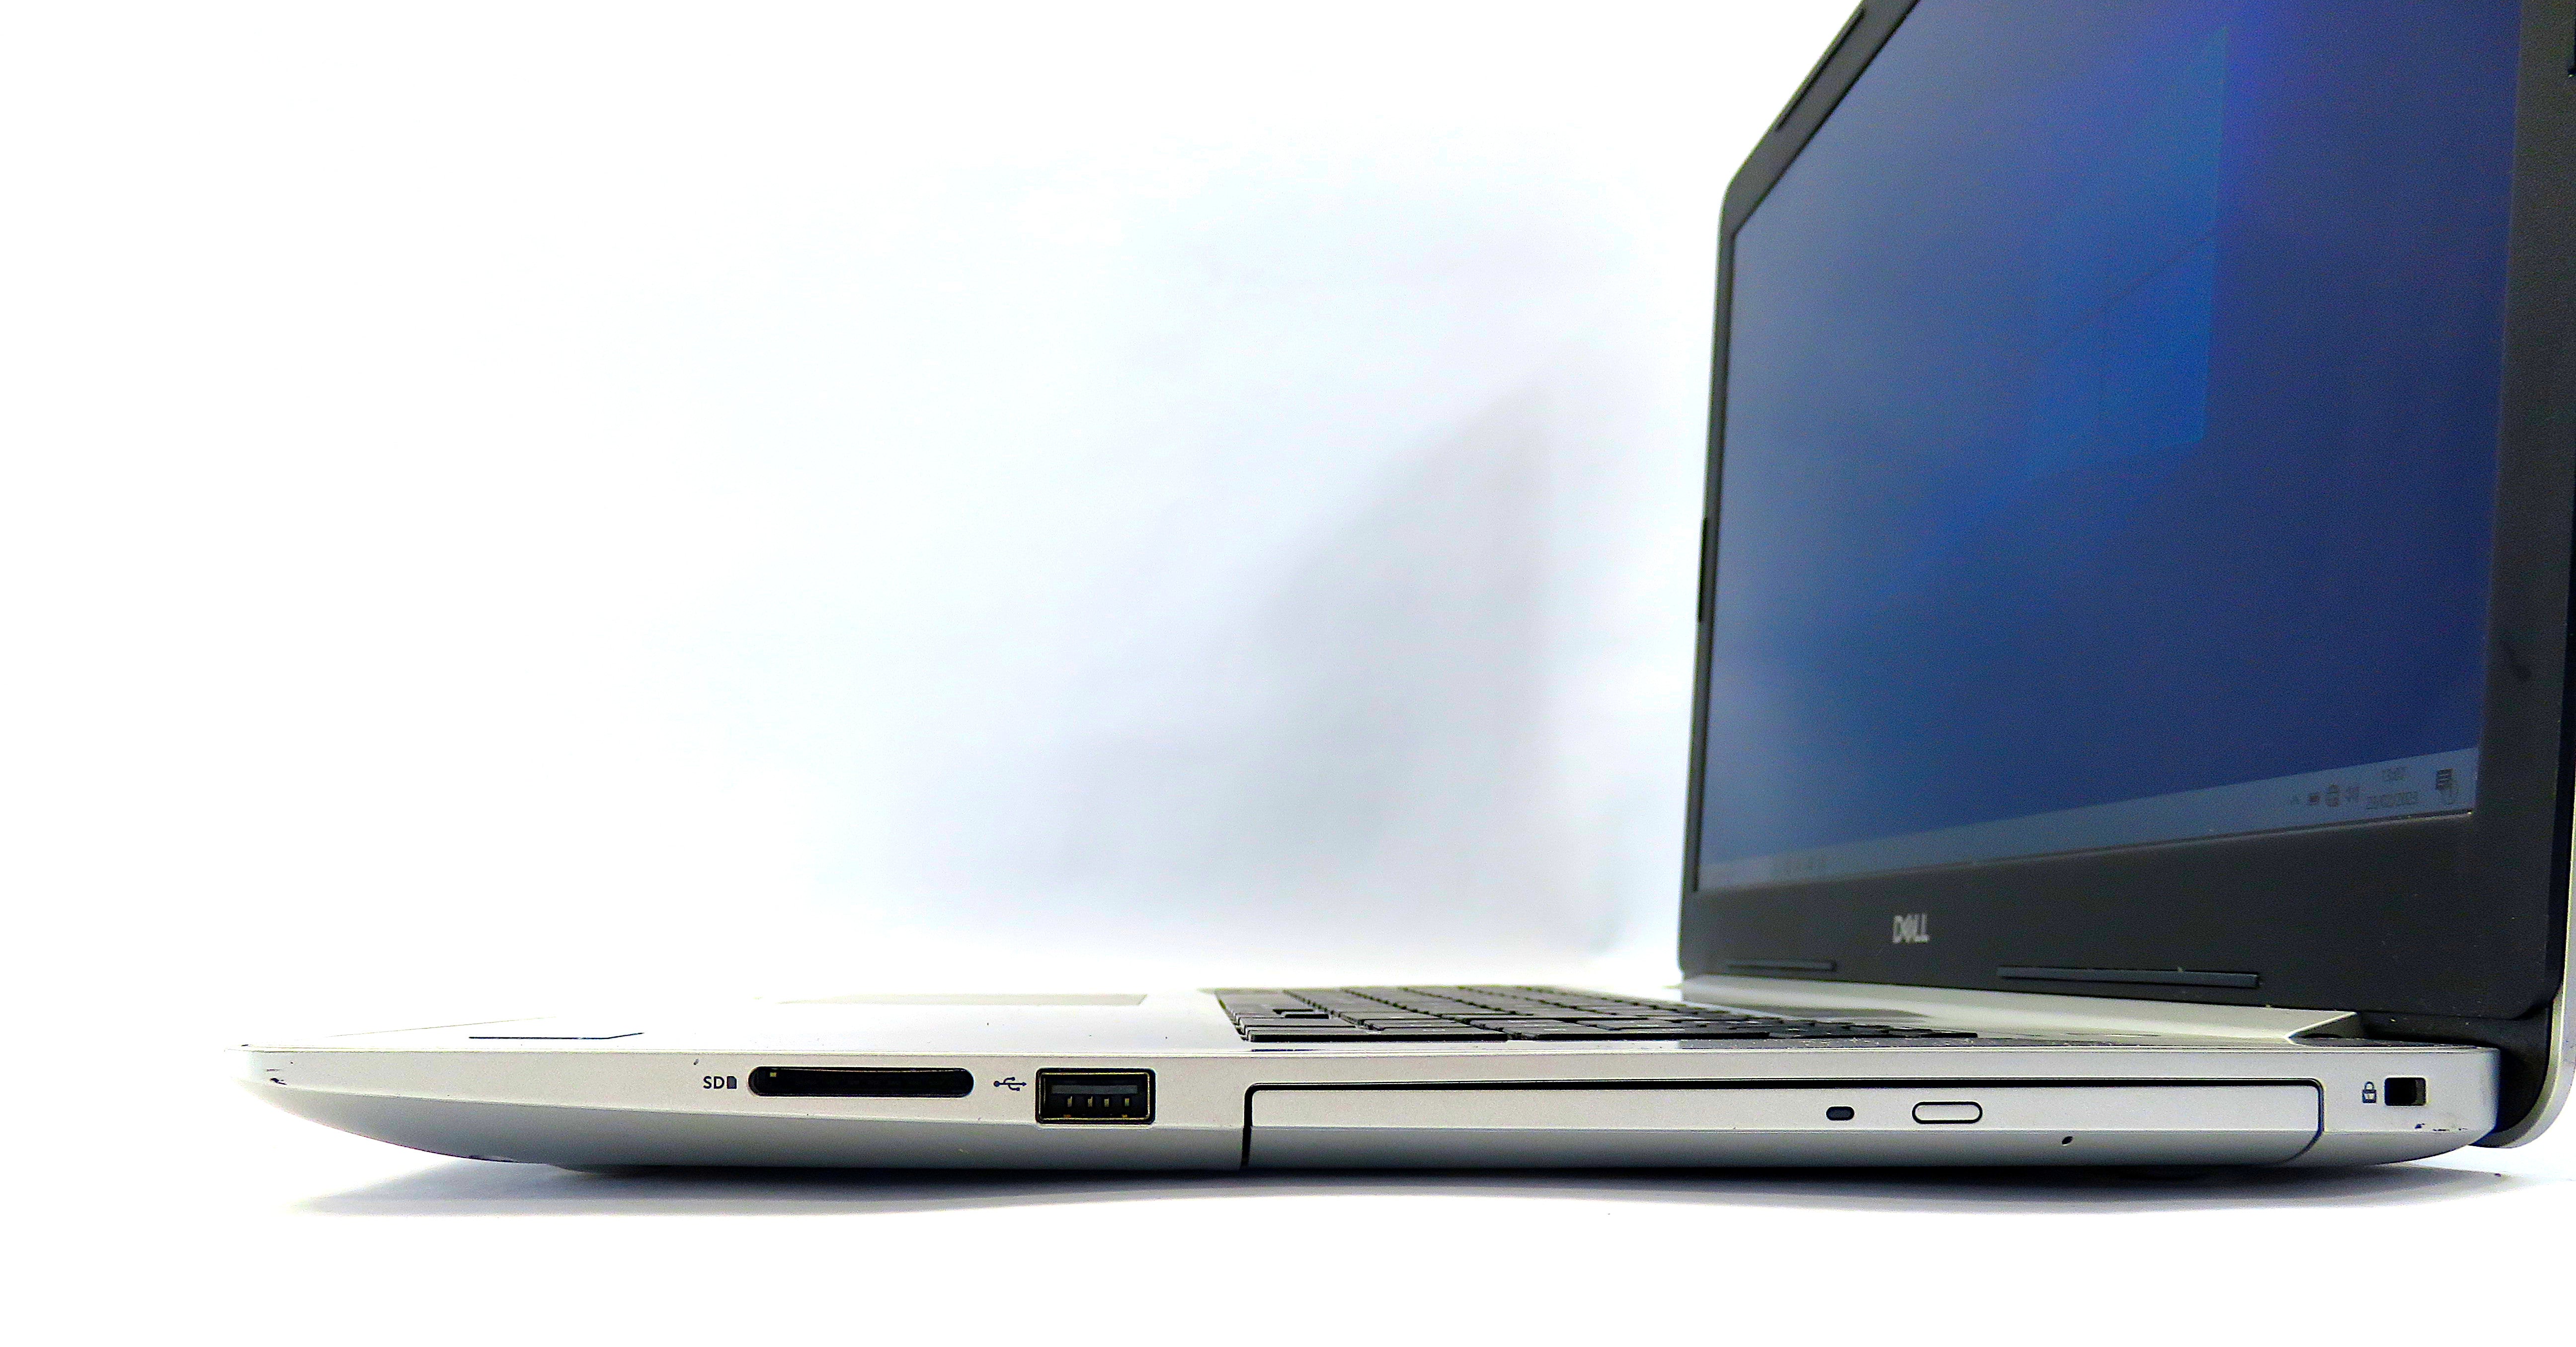 Dell Inspiron 5770 Laptop
17.3" Intel Core i3
8GB RAM
256GB SSD